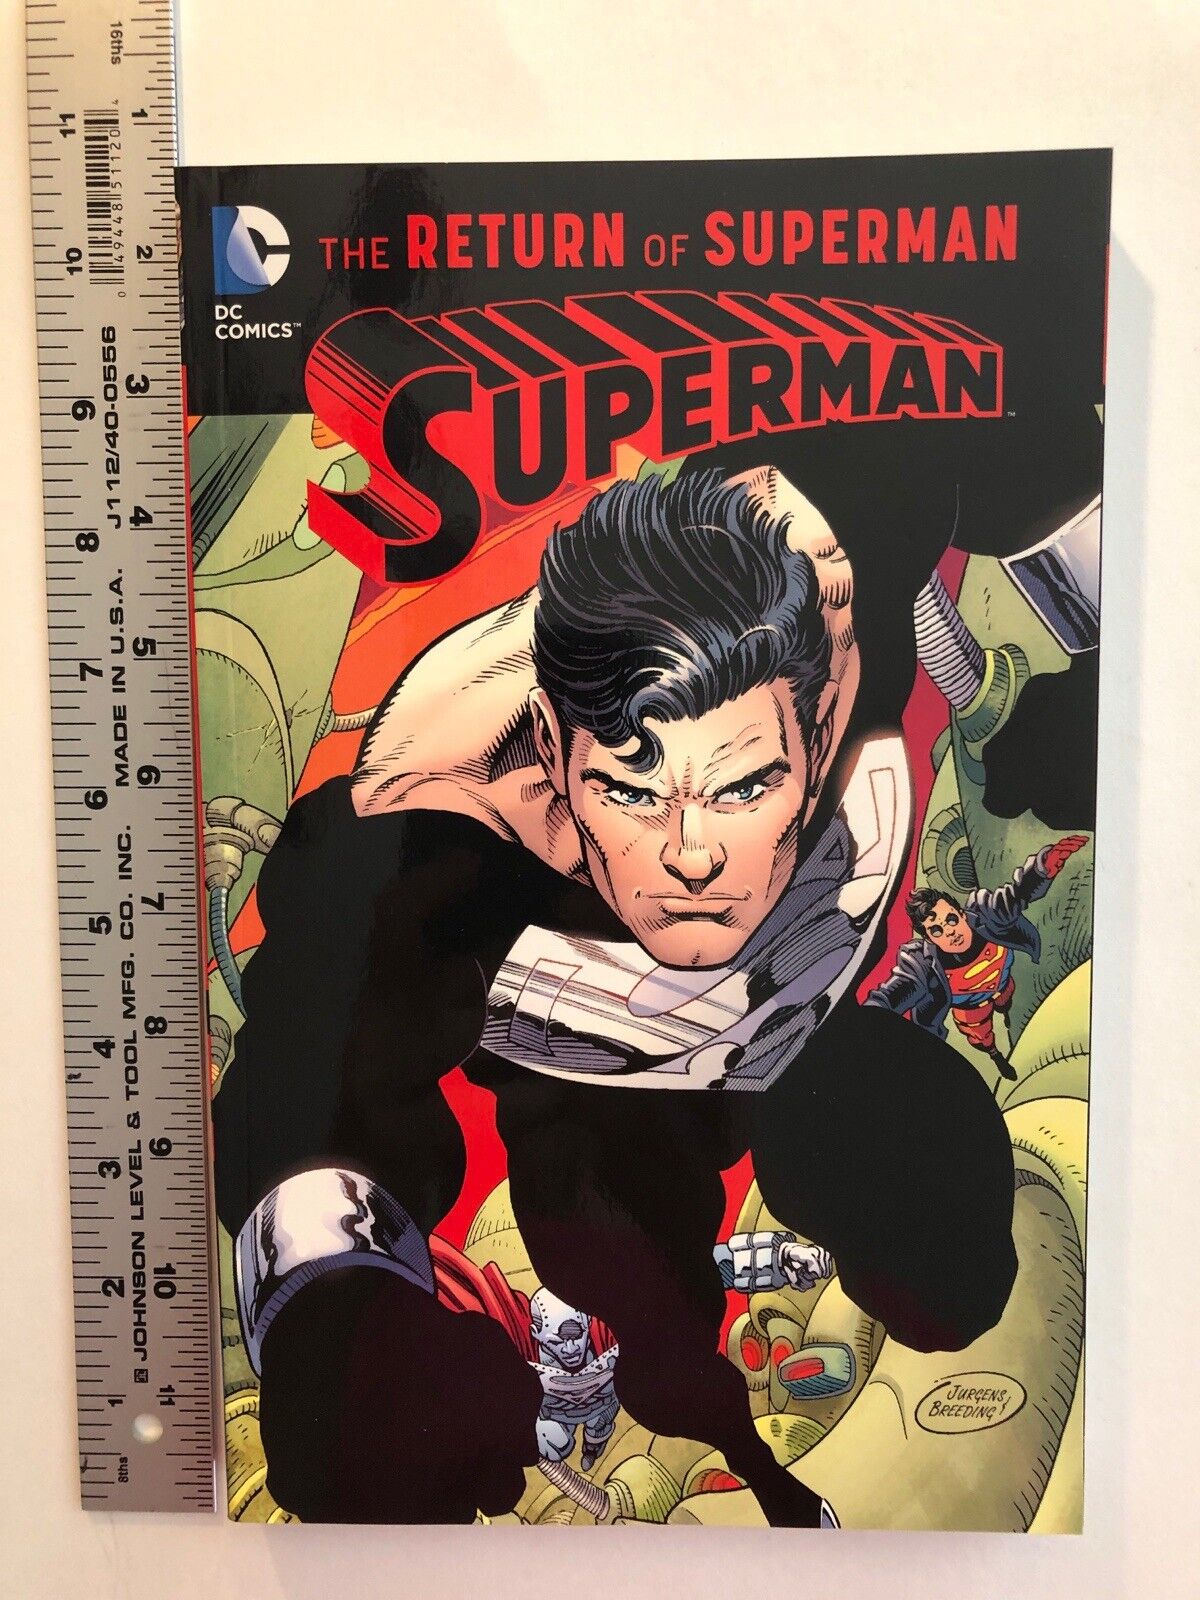 Superman #4: The Return Of Superman by Dan Jurgens (DC Comics, 2016, Paperback)